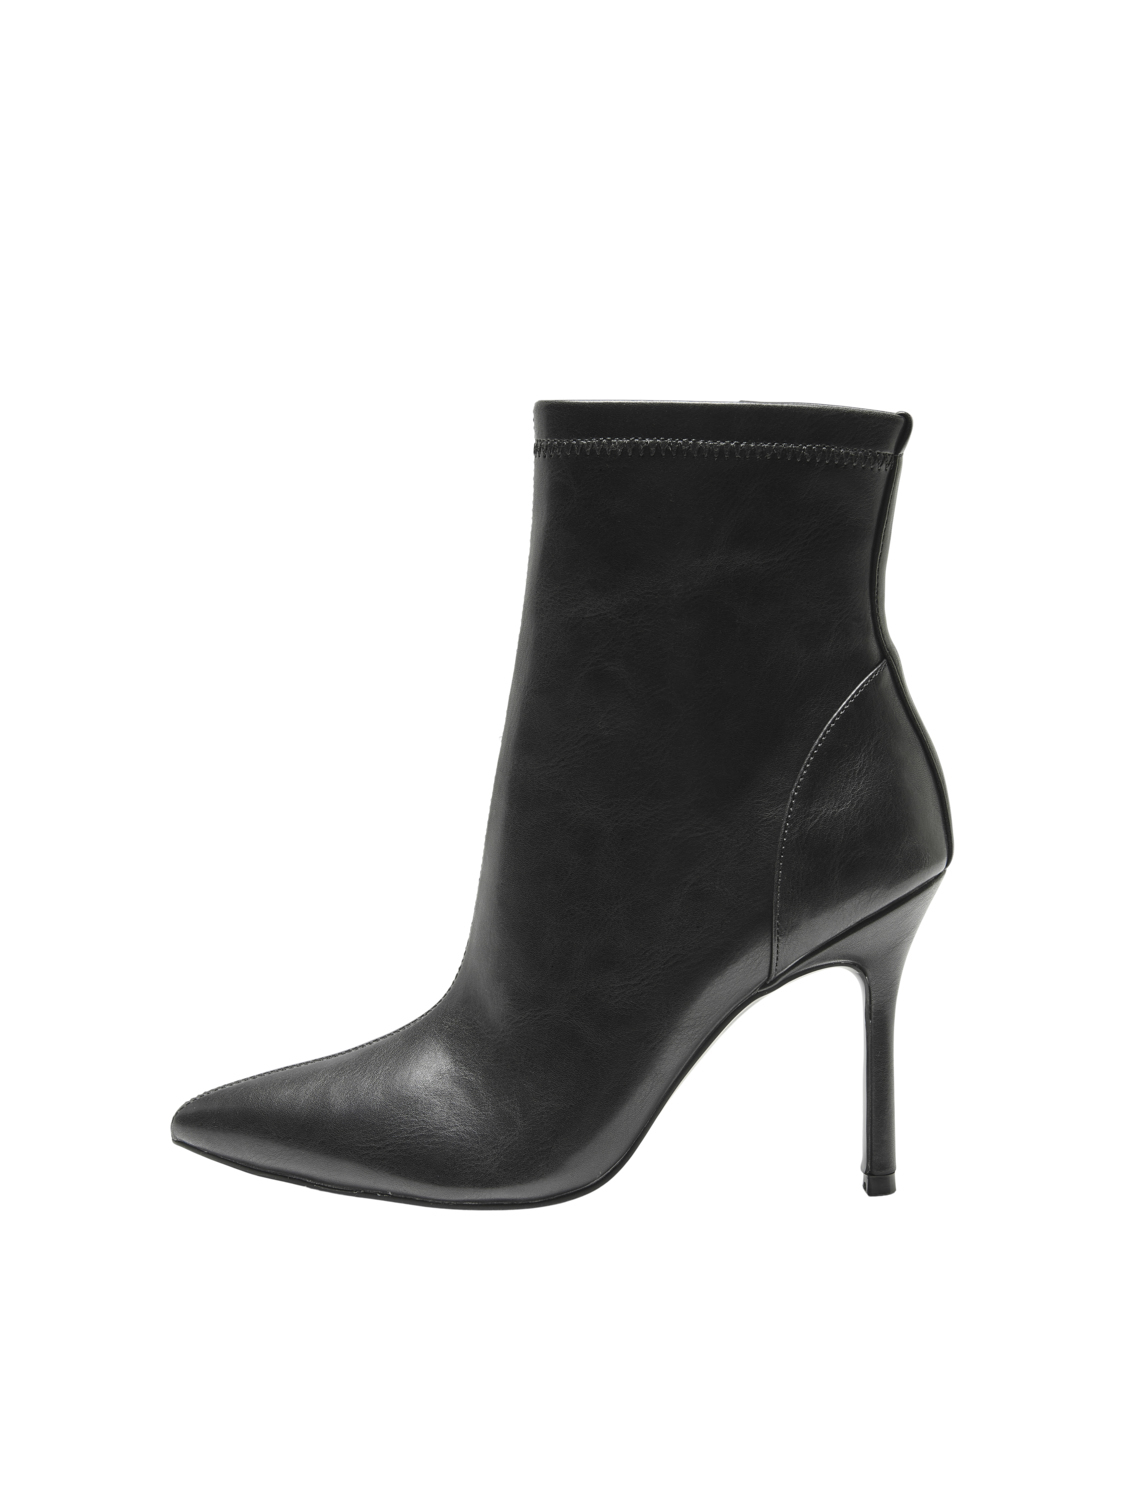 FINAL SALE- Cali stiletto heel ankle boots, BLACK, large